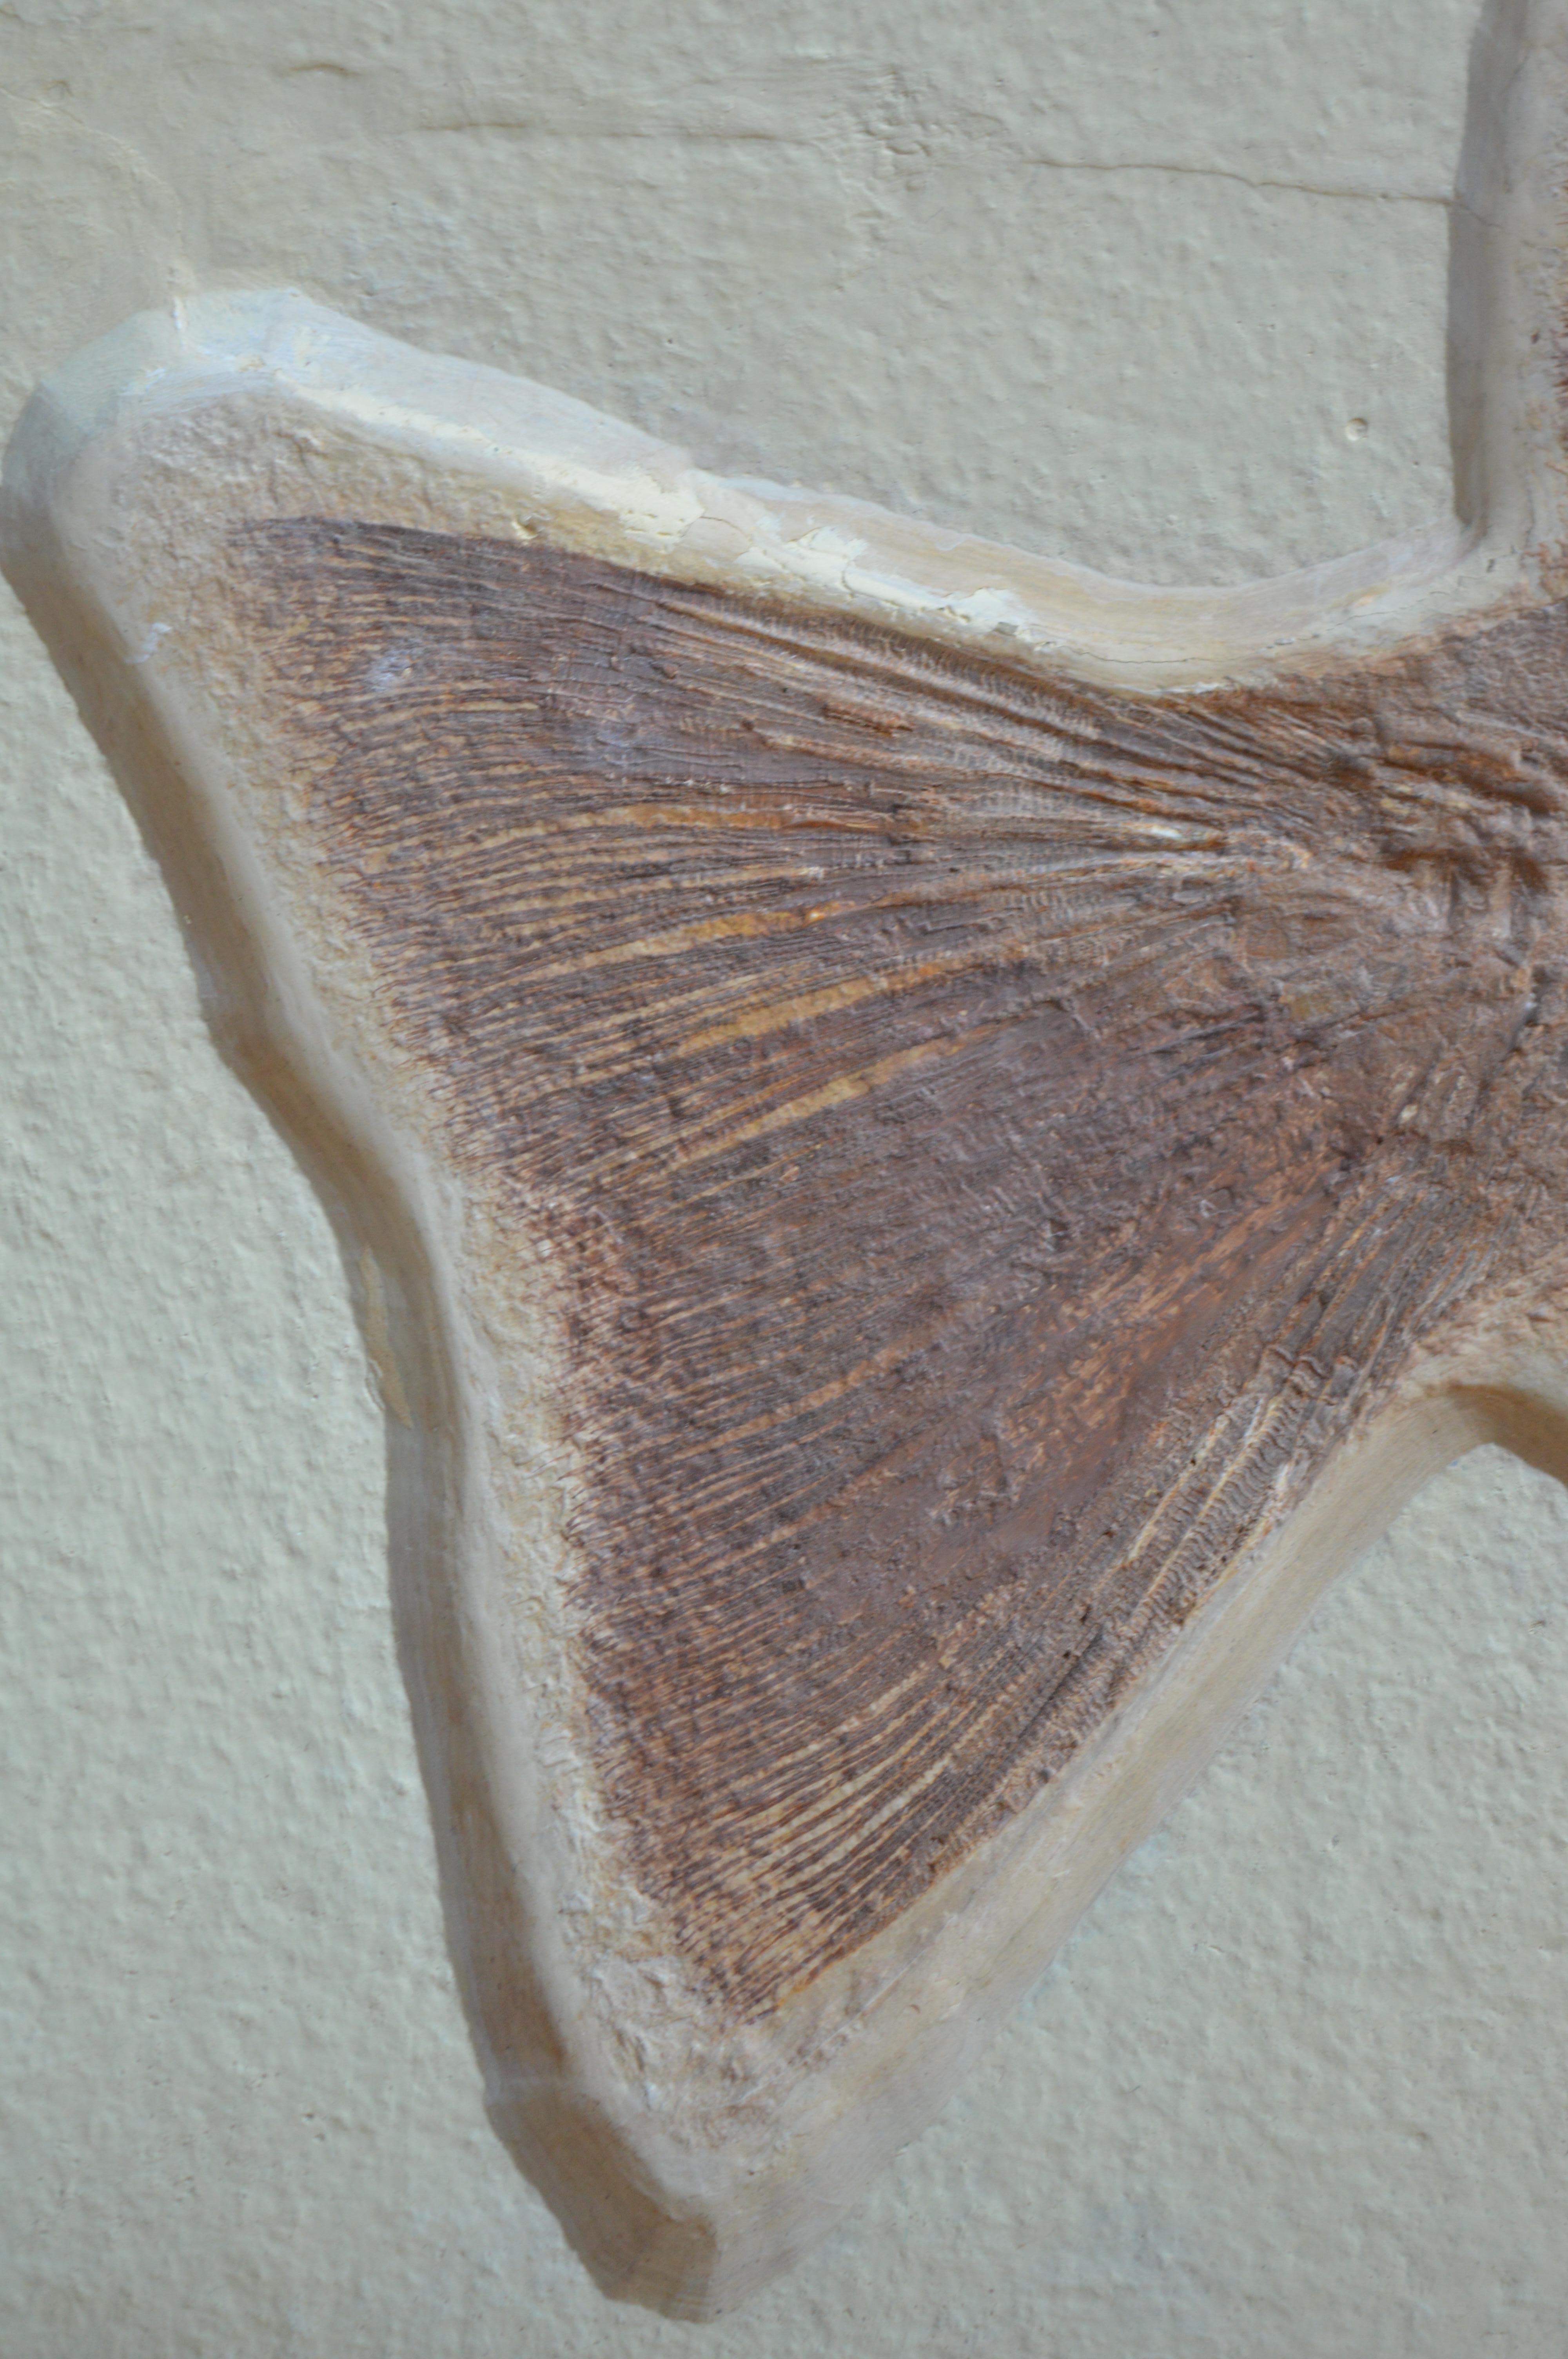 18th Century and Earlier Phareodus Fish Fossil from Eocene Era on Limestone